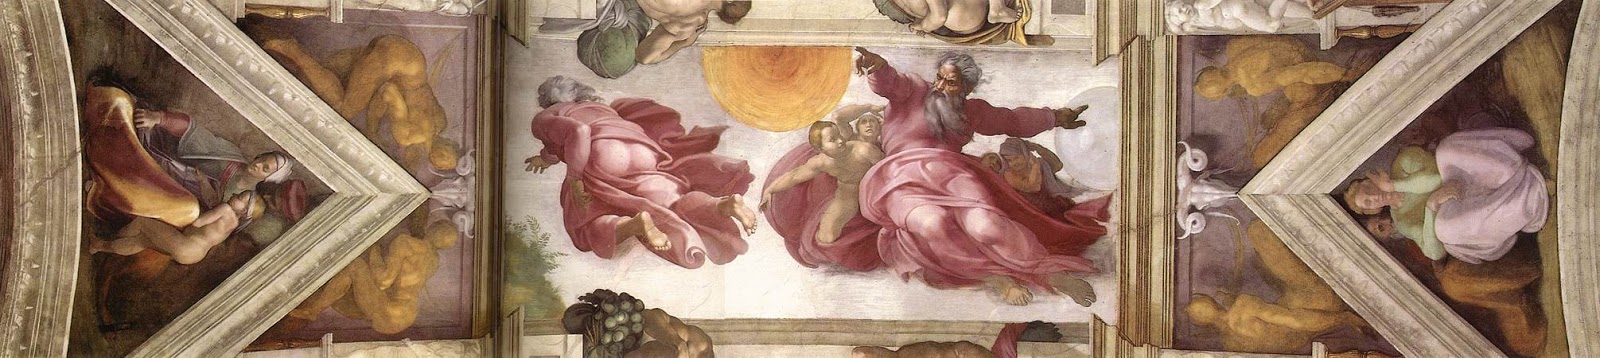 Michelangelo+Buonarroti-1475-1564 (377).jpg